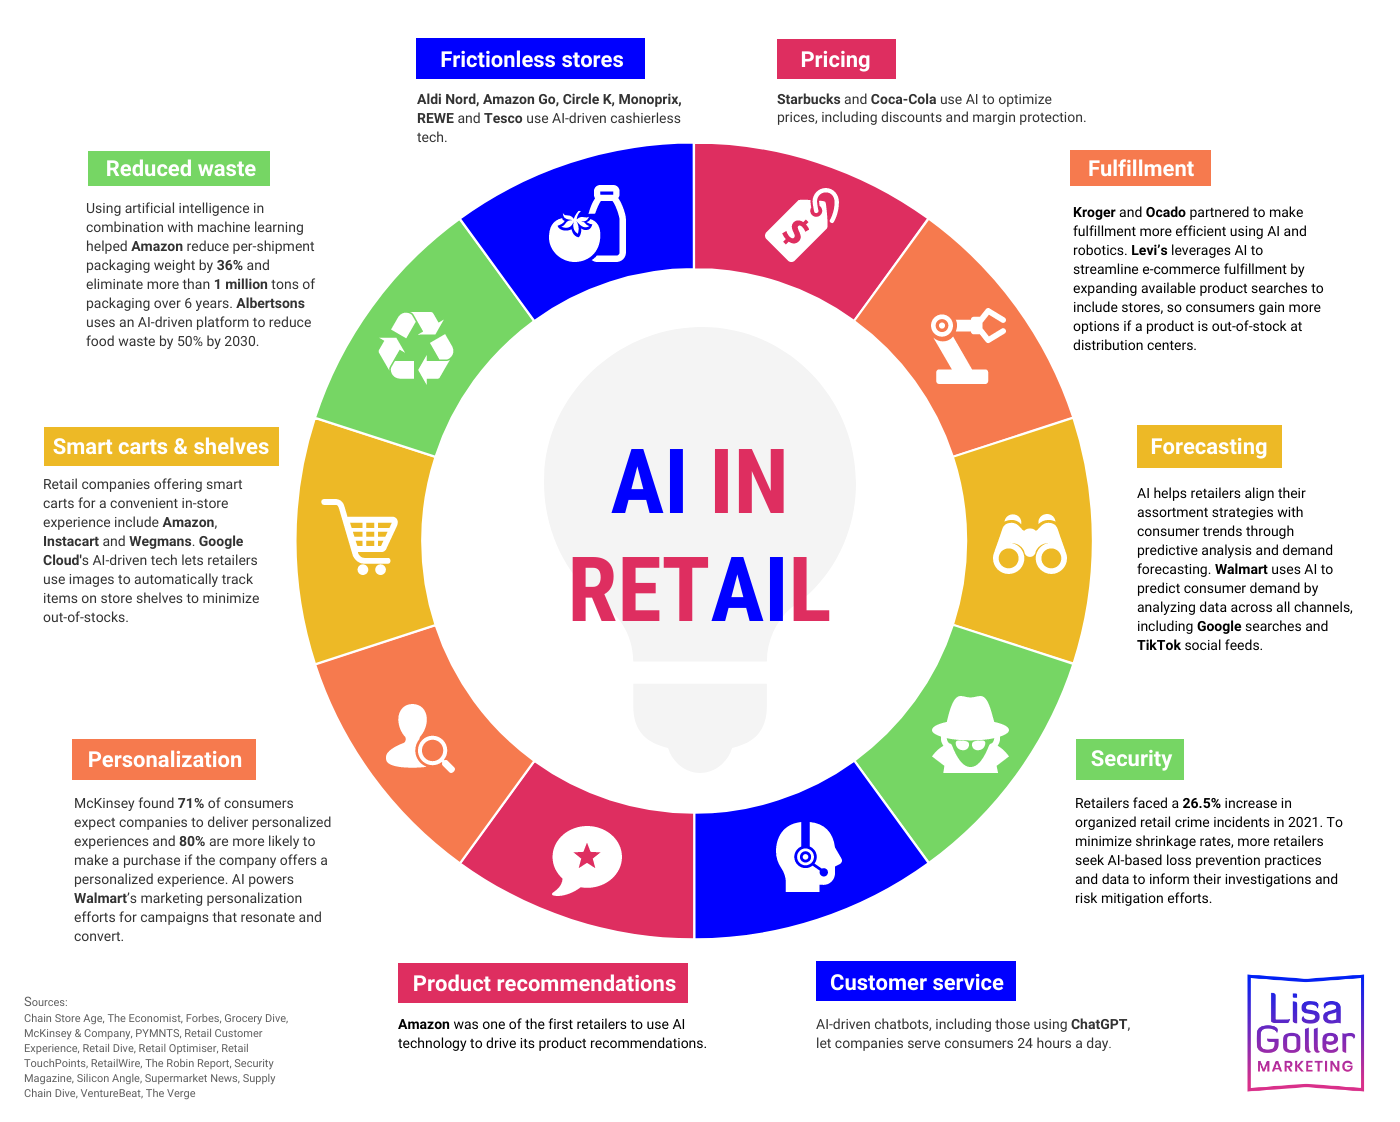 AI-in-Retail.-Lisa-Goller-Marketing.-lisagoller.com_